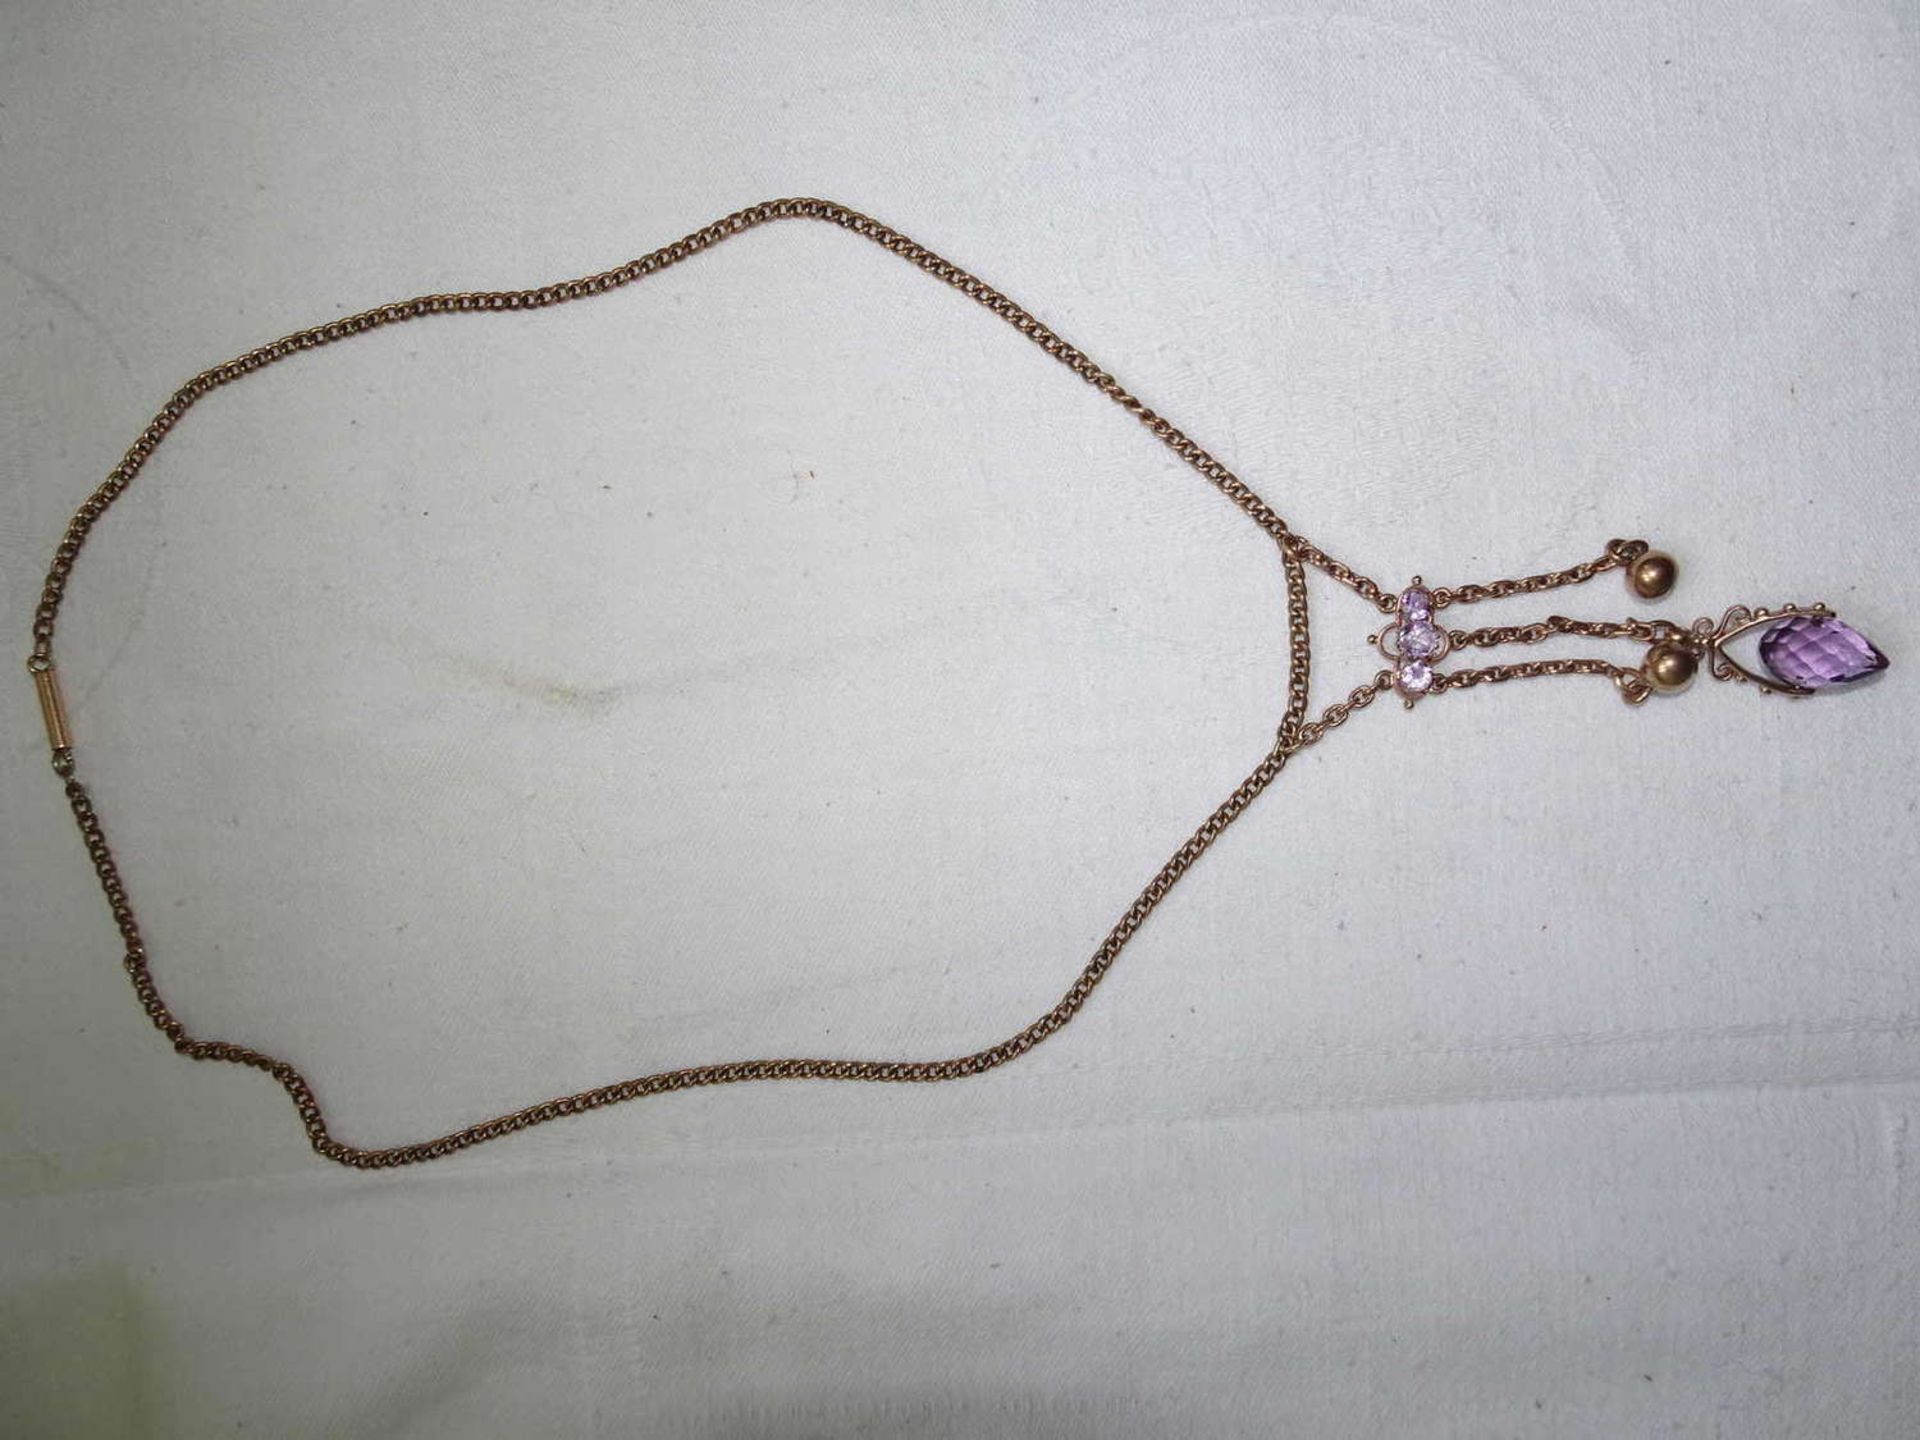 Art Nouveau necklace, with suspension. Set with amethysts. Length about 48 cmJugendstil Collier, mit